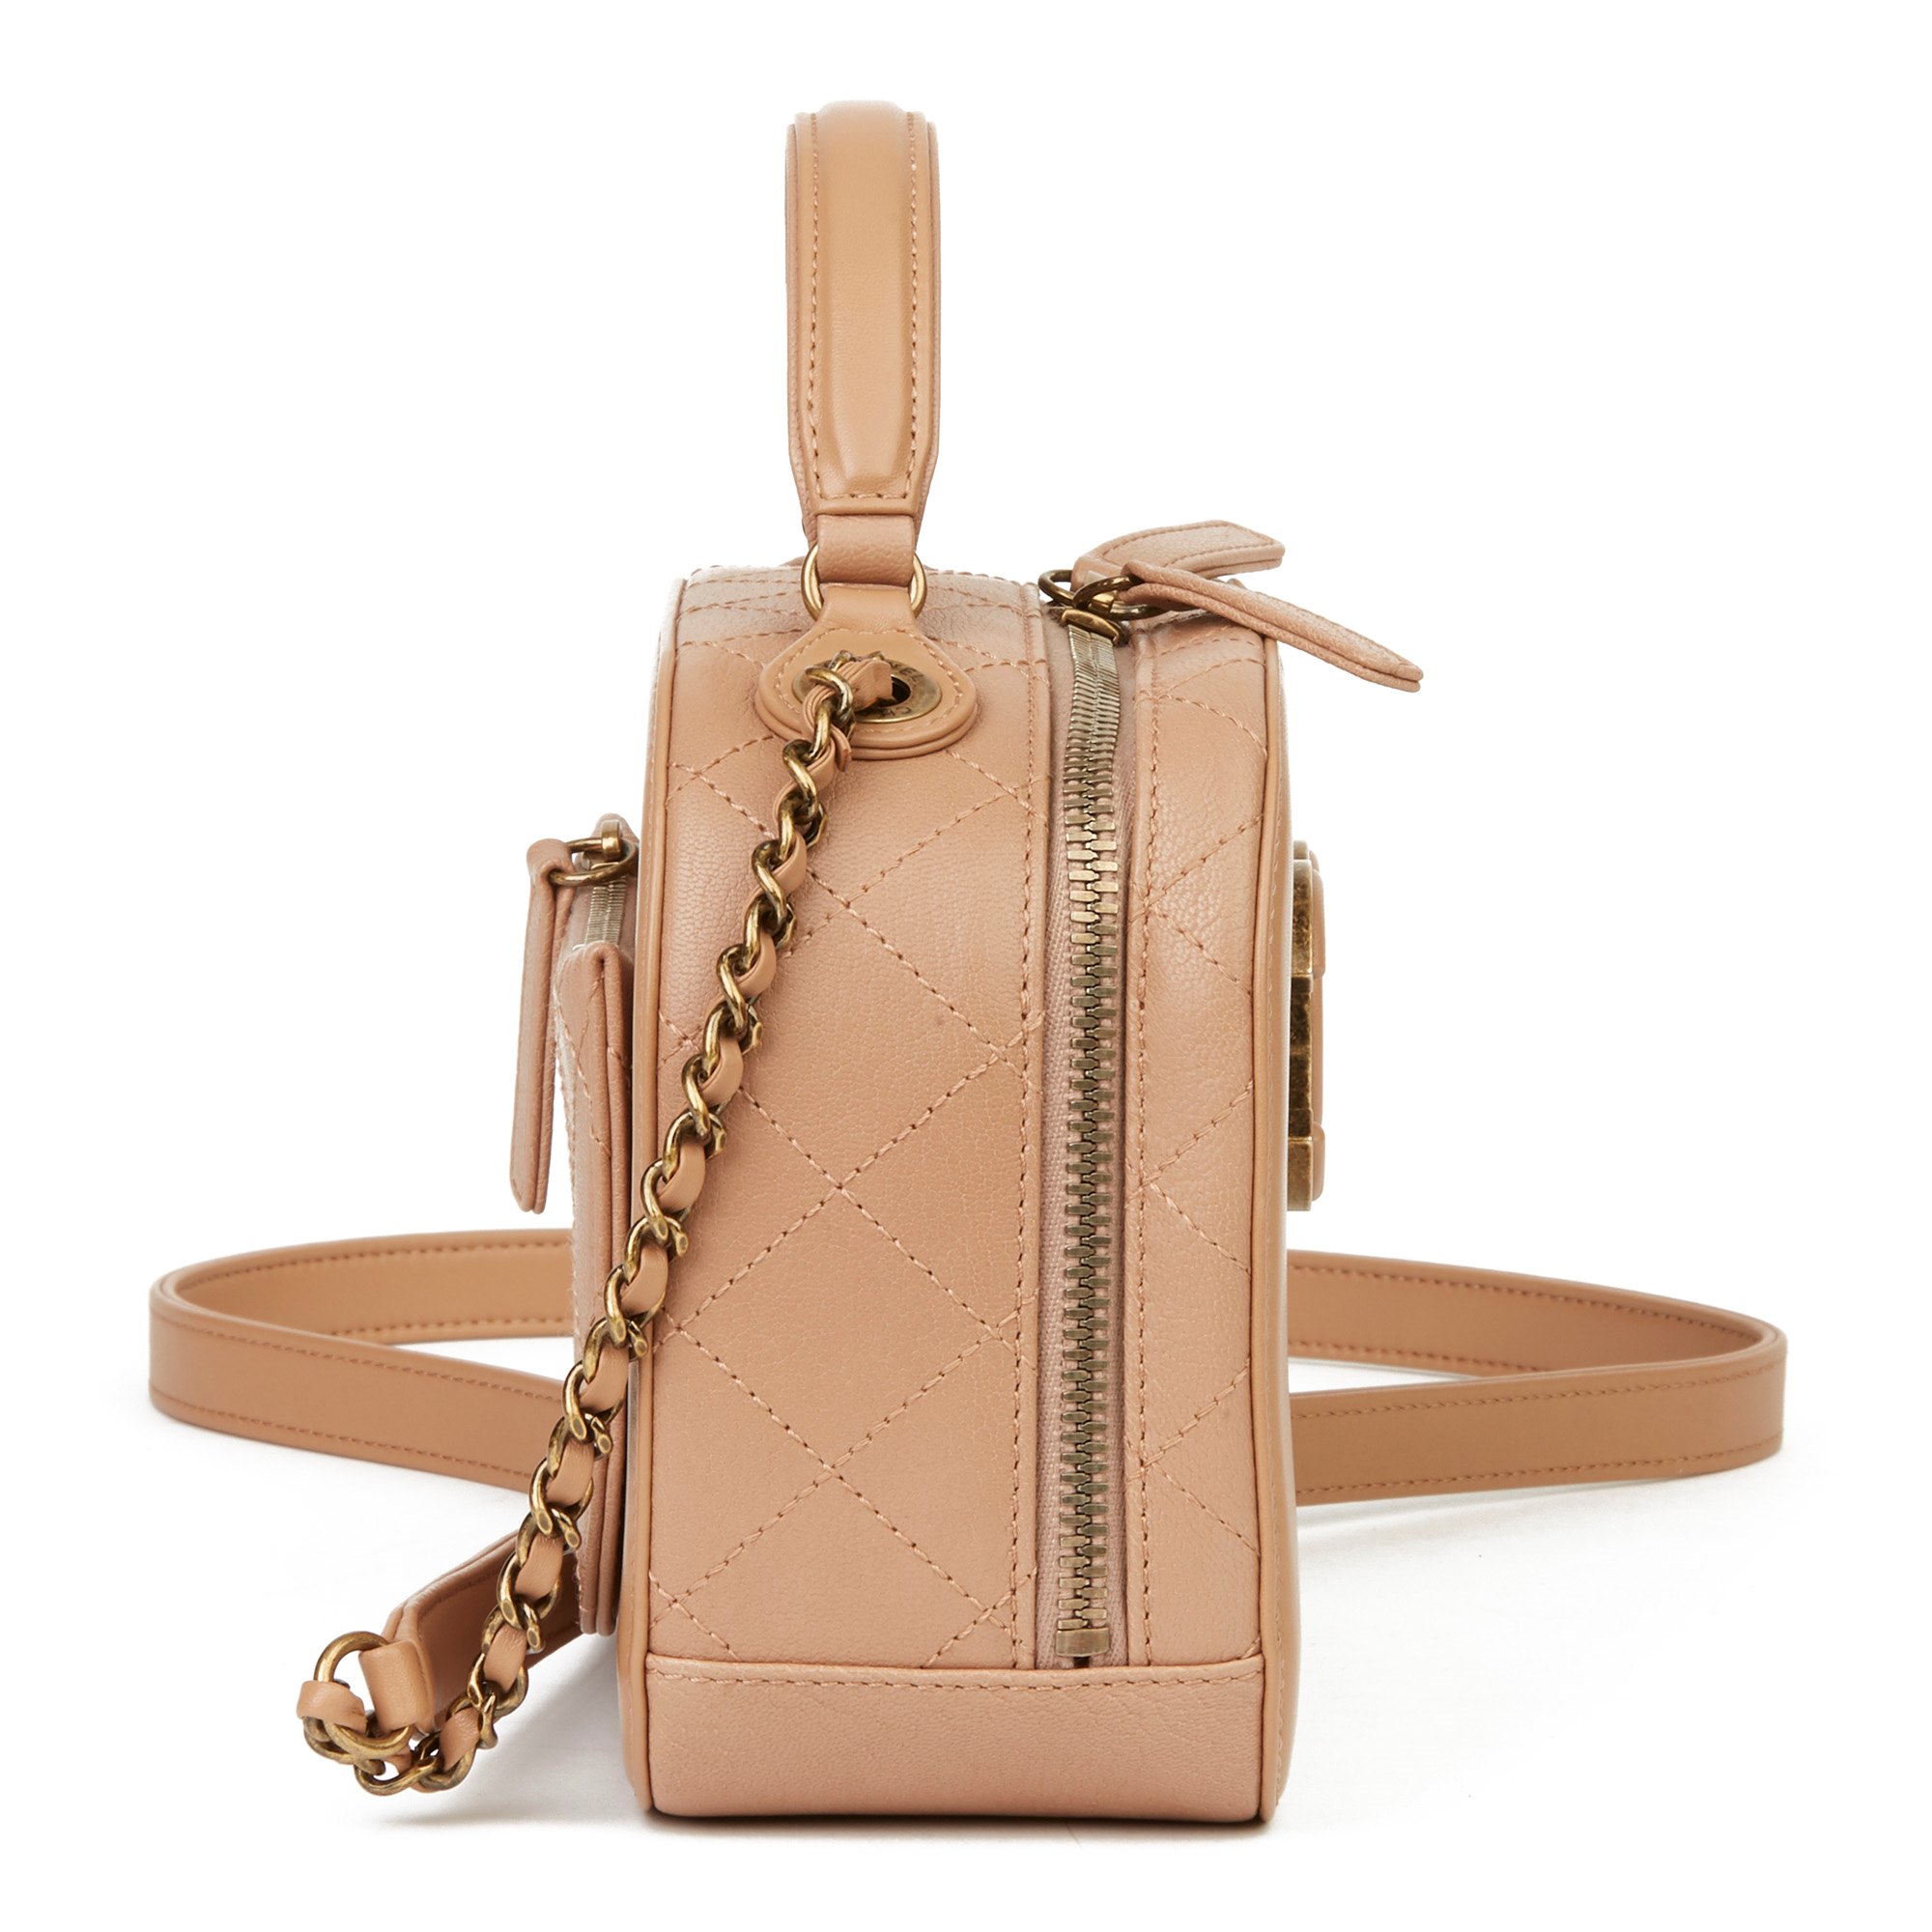 Chanel Small Coco Curve Vanity Bag 2017 HB3610 | Second Hand Handbags